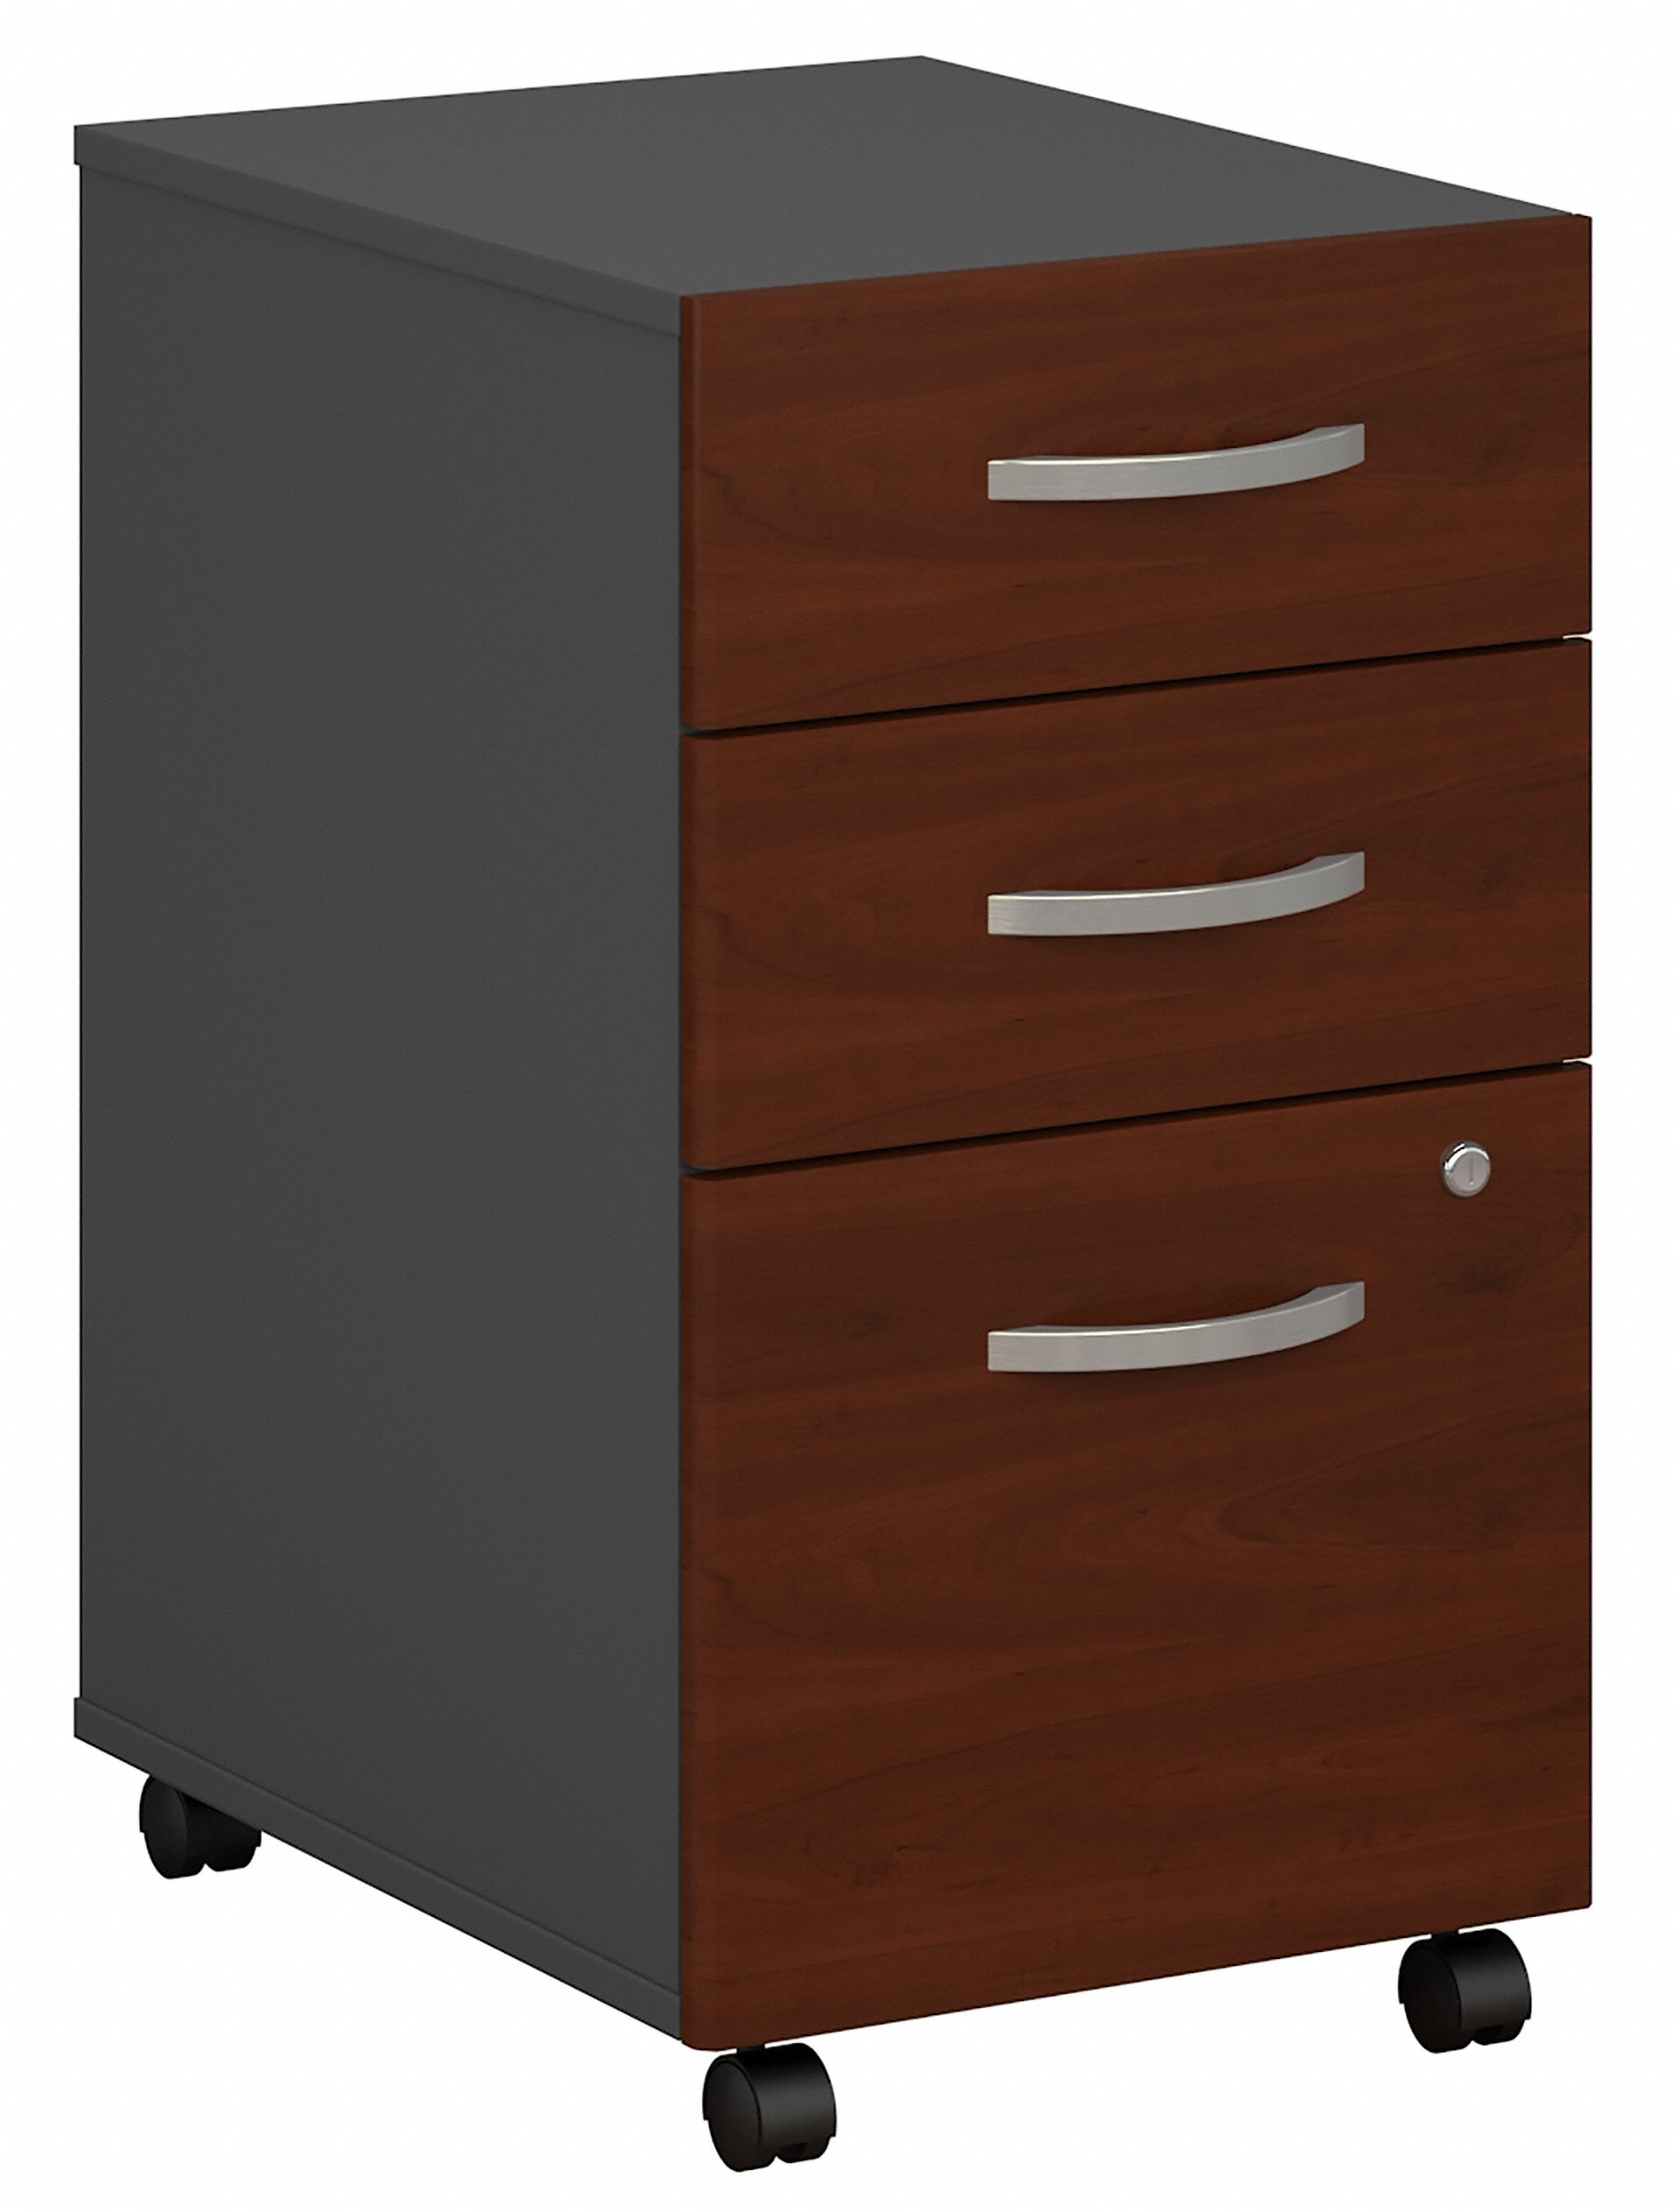 Shop Bush Business Furniture Series C 3 Drawer Mobile File Cabinet 02 WC24453 #color_hansen cherry/graphite gray